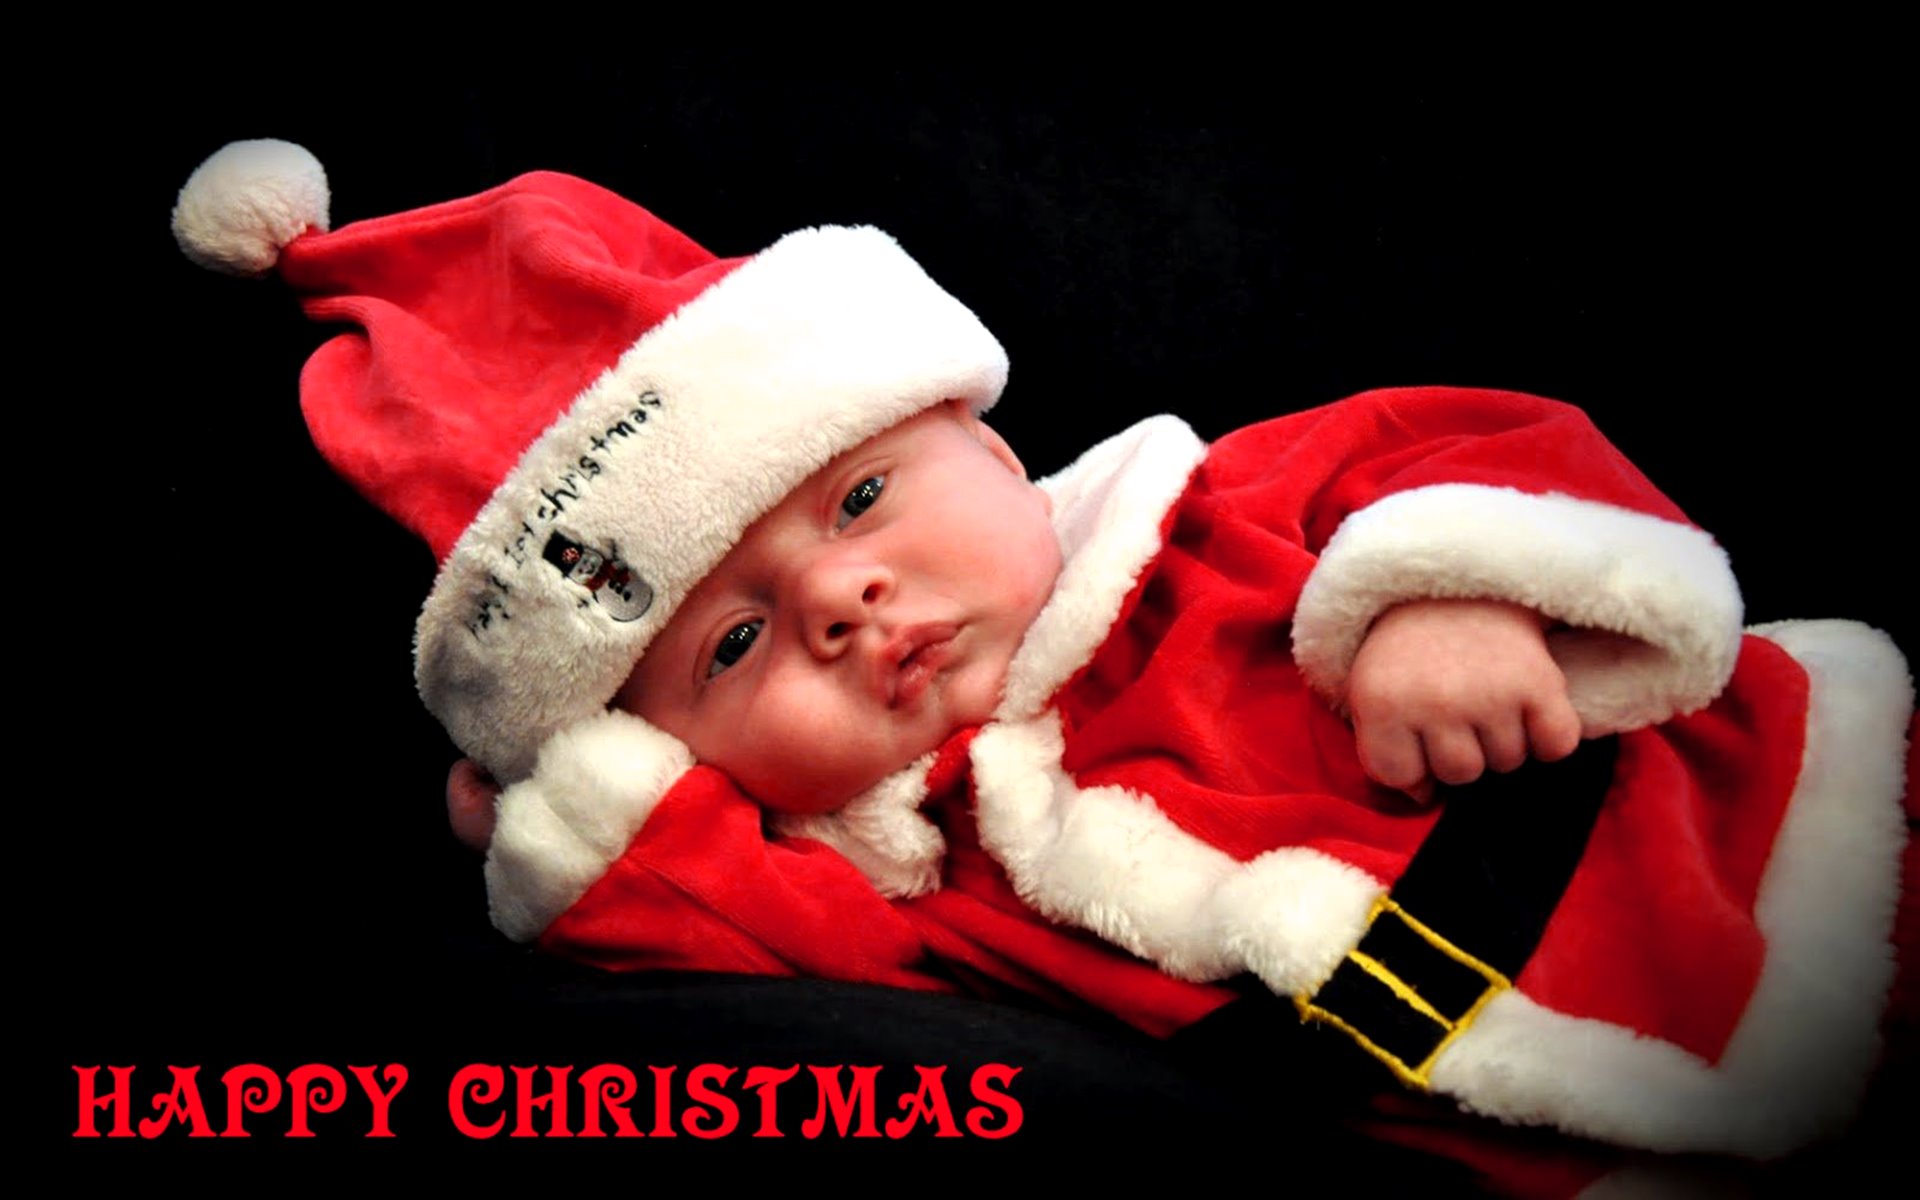 Cute Baby In Santa Dress - 1920x1200 Wallpaper 